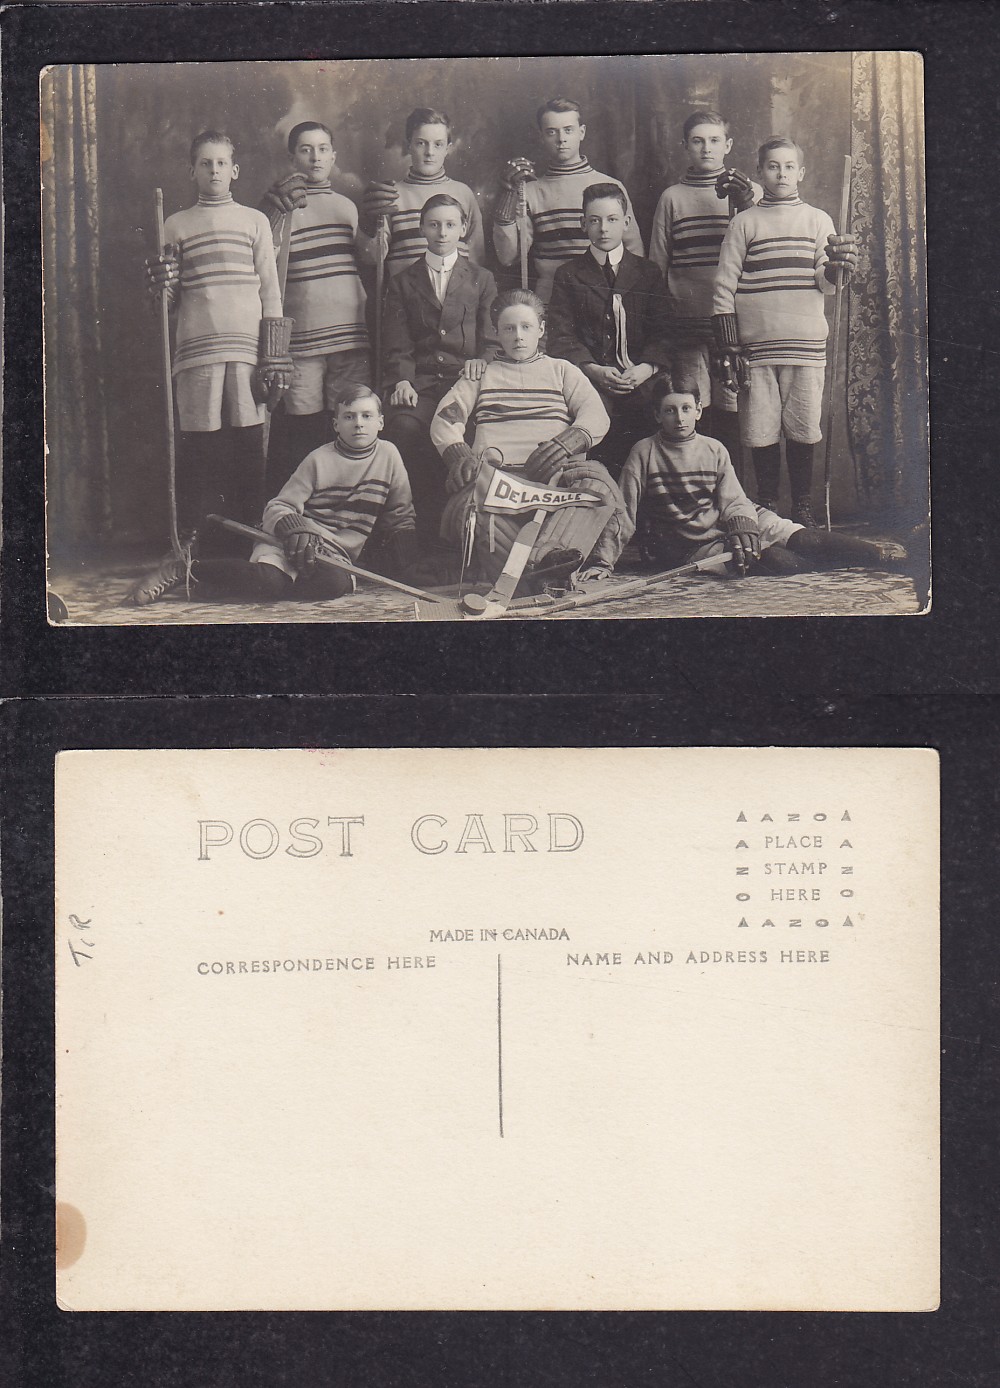 1900'S DE LASALLE HOCKEY TEAM POST CARD photo